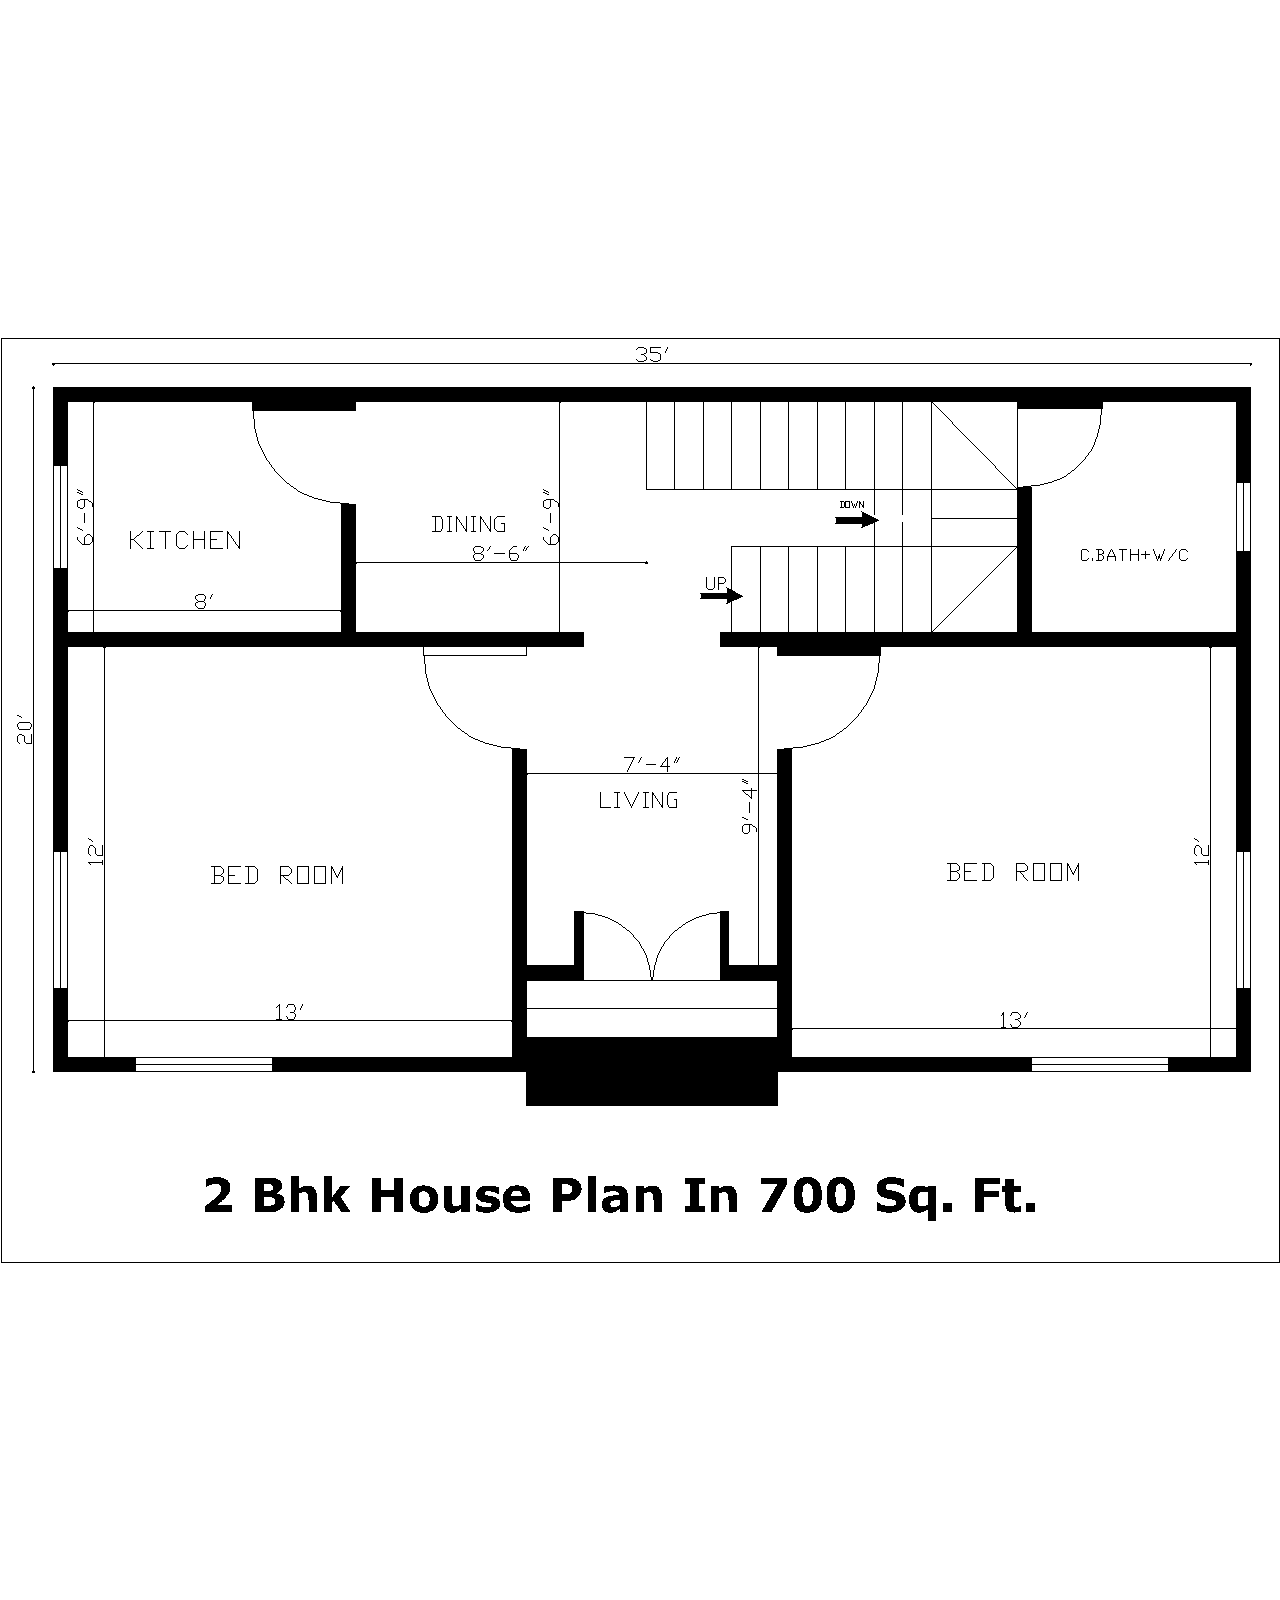 2 Bhk House Plan In 700 Sq. Ft. | 2 Bhk Gharka Naksha In 700 Sq. Ft.